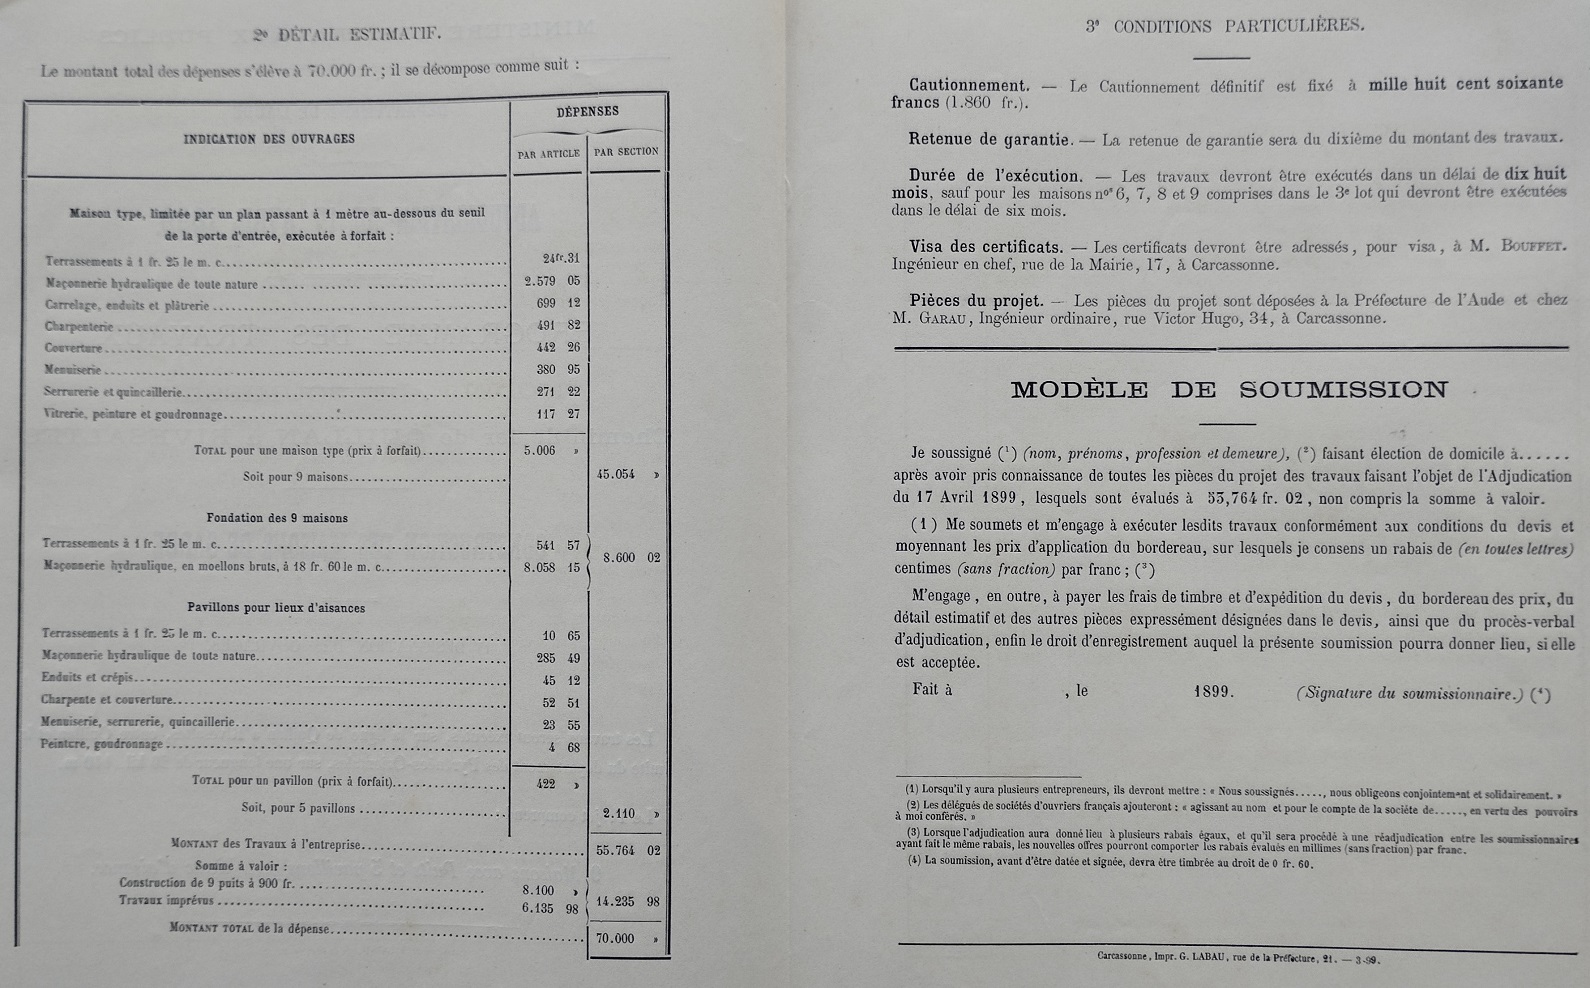 Programme des travaux - adjudication du 18 avril 1899 - 2, 3